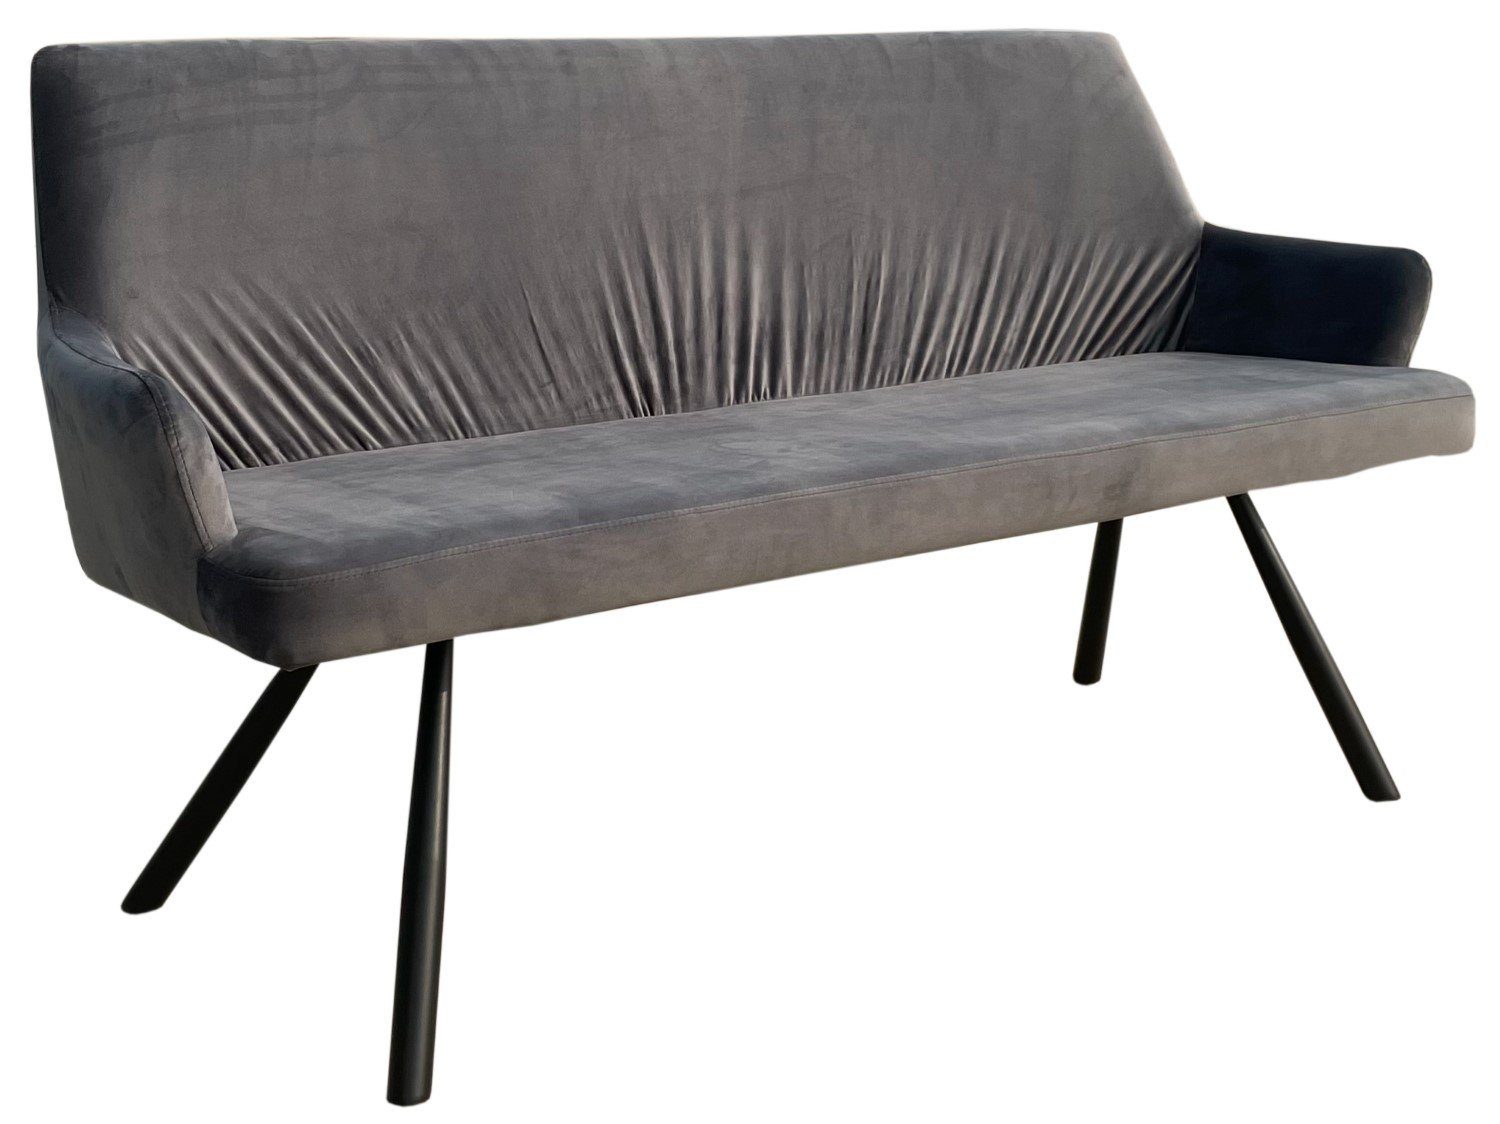 165 cm Metall-Gestell - - Samt bene Samtbezug - - grau, Modena hohe Esszimmer Rückenlehne living Sofa - - - Armlehnen